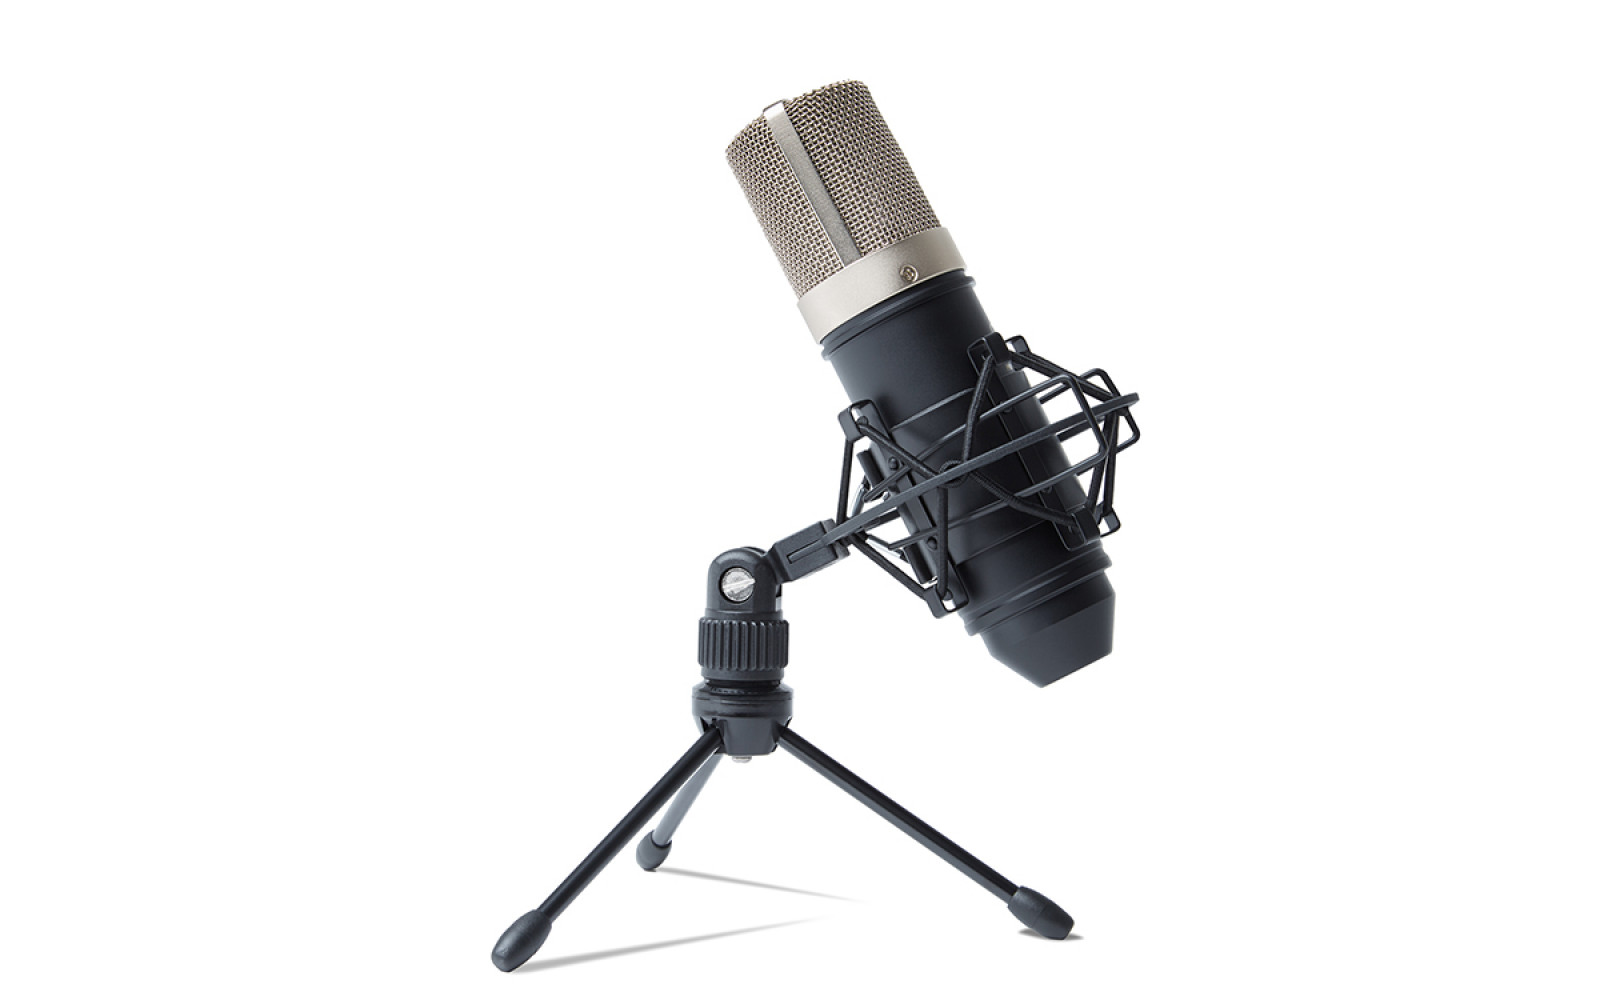 Marantz Professional MPM-1000 Large-Diaphragm Cardioid Condenser Microphone